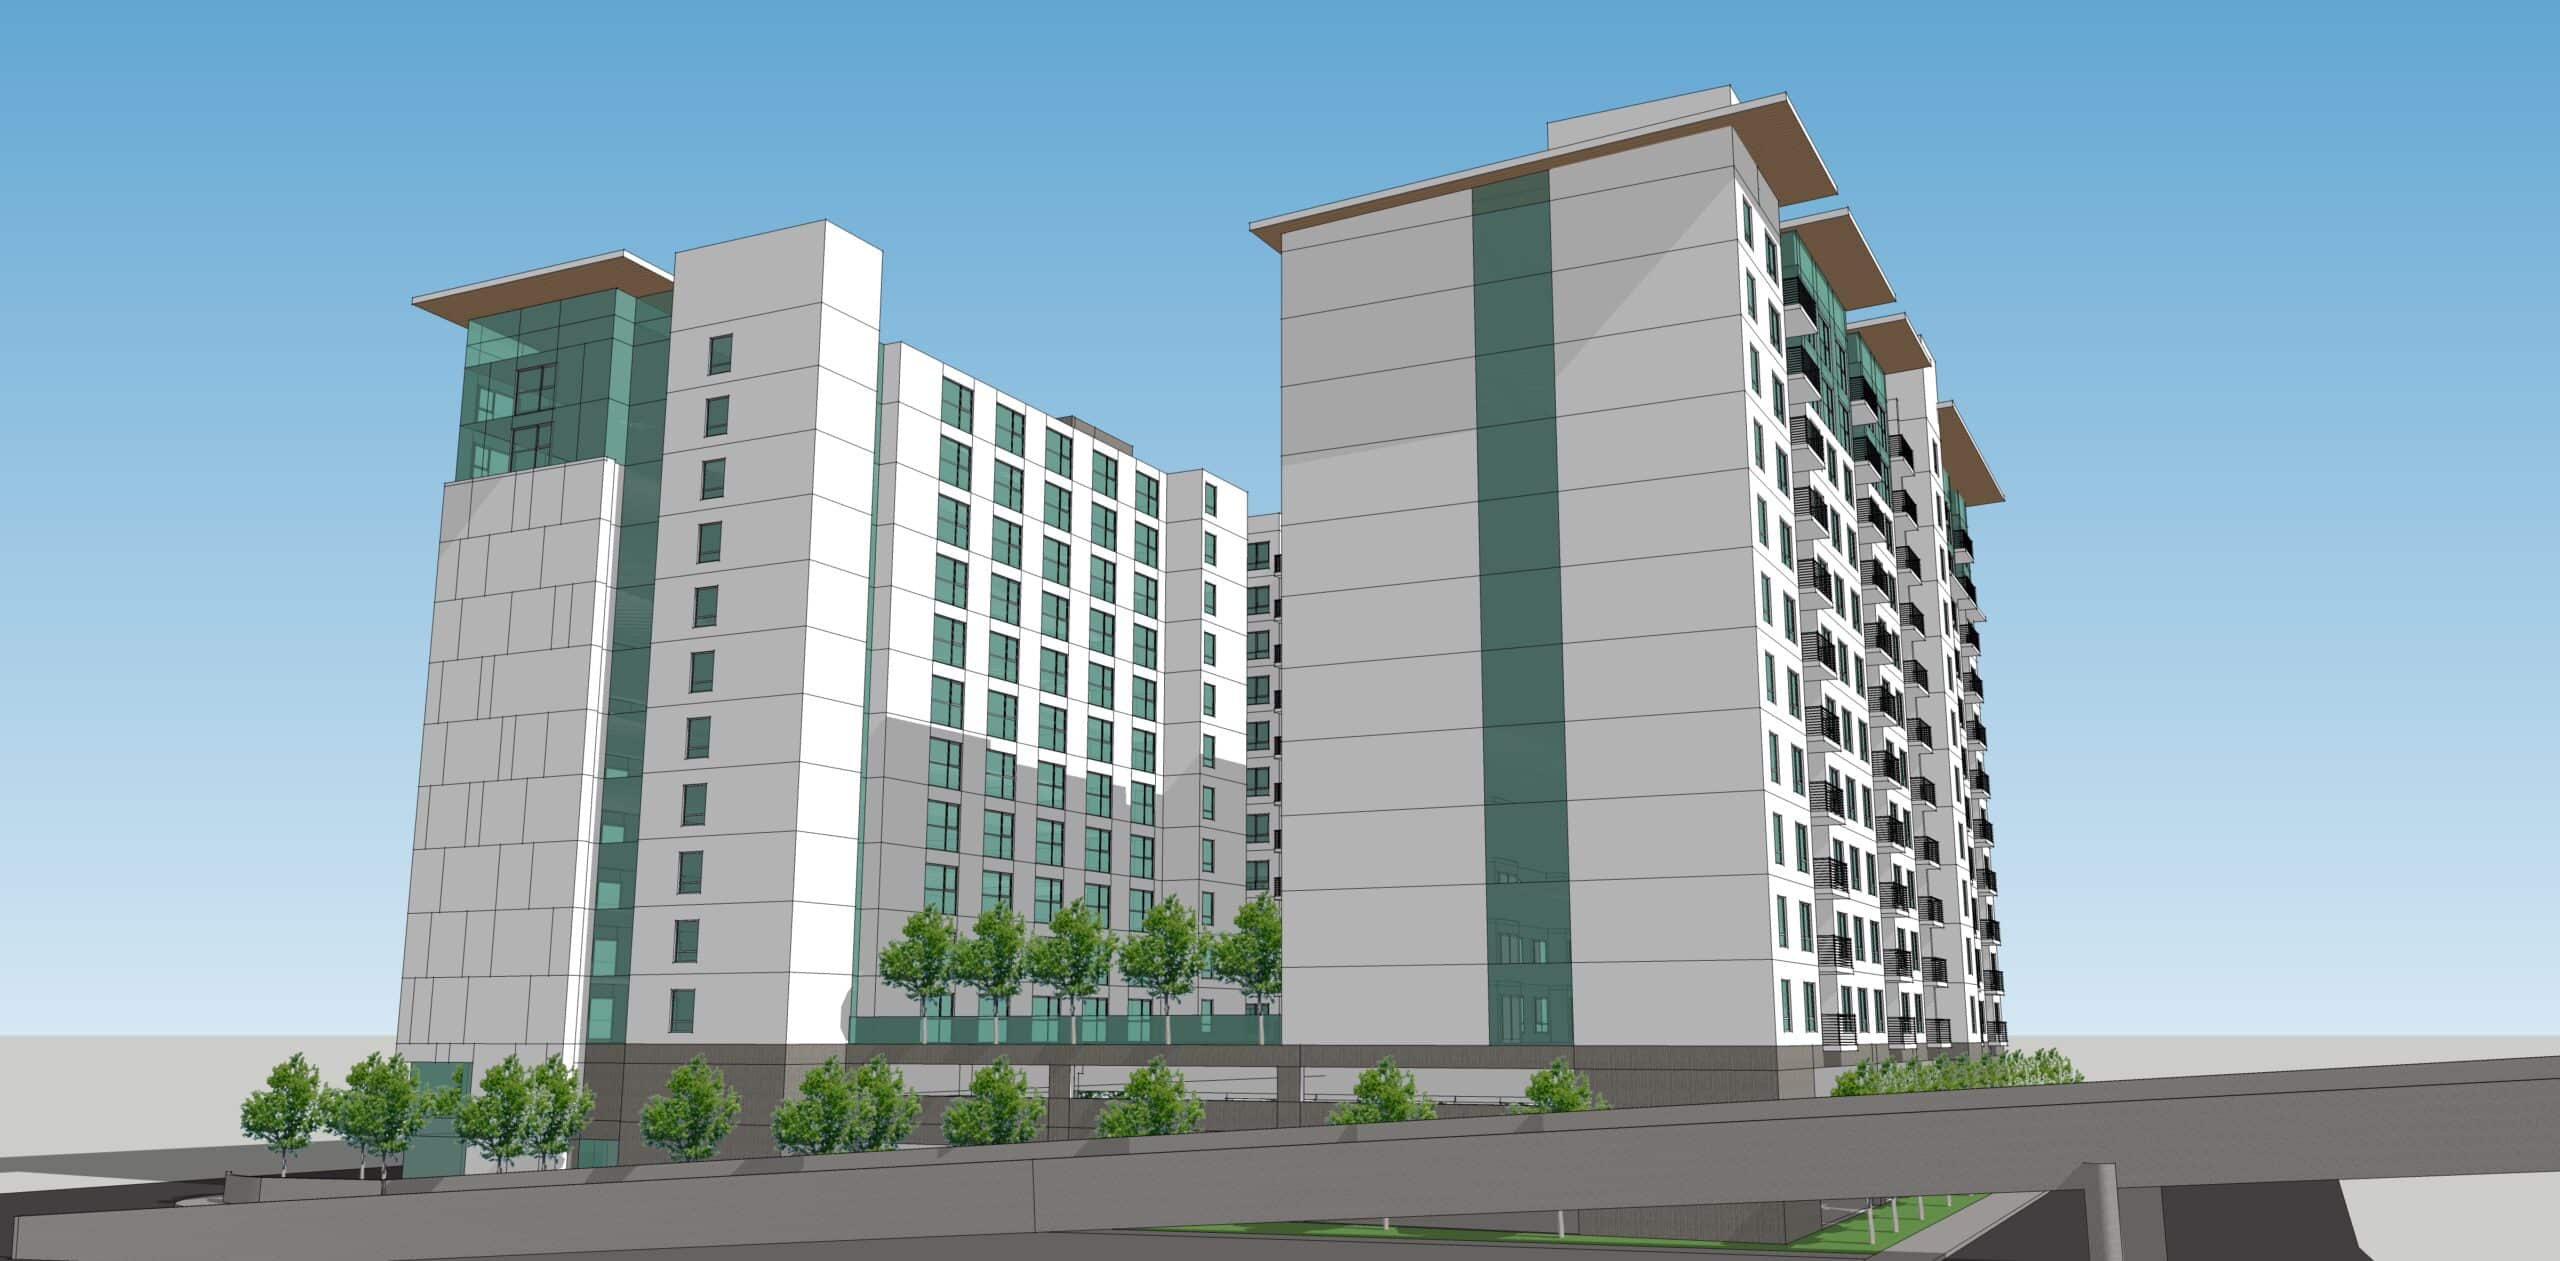 McEvoy Apartments preliminary concept